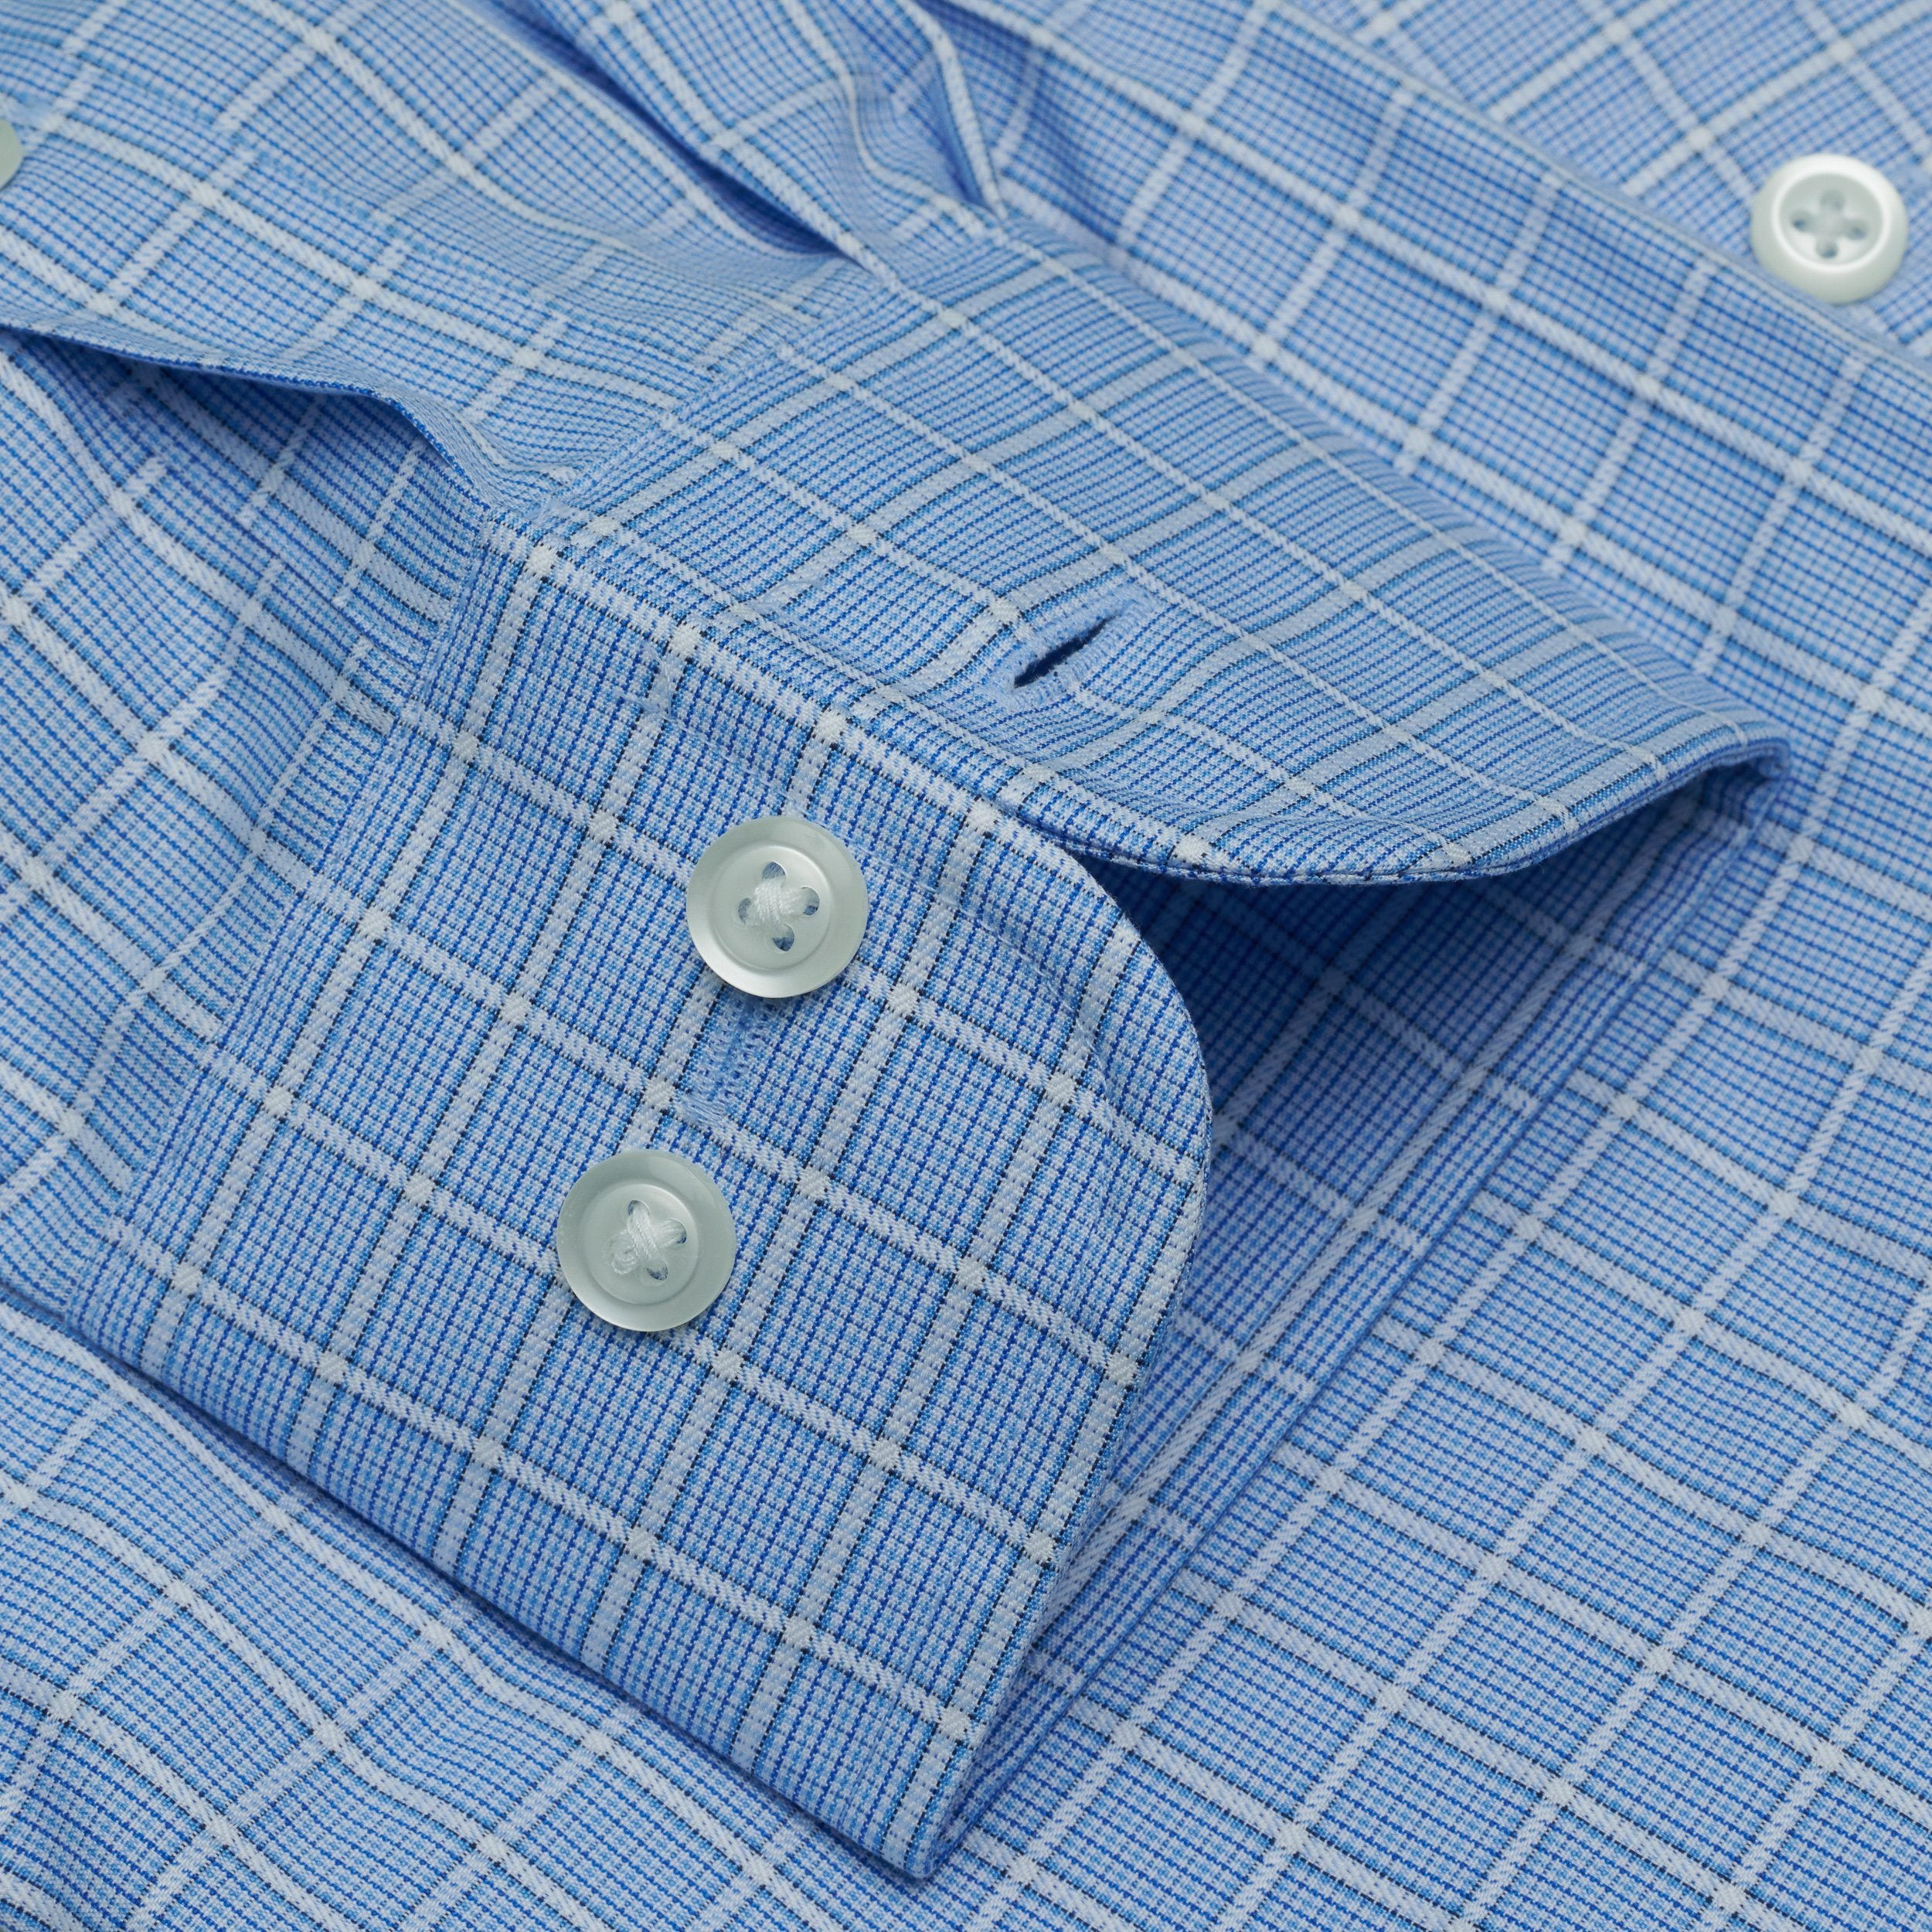 072-Blue Overlay Check-Spread Collar-Tailor Fit Best Dress Shirt 